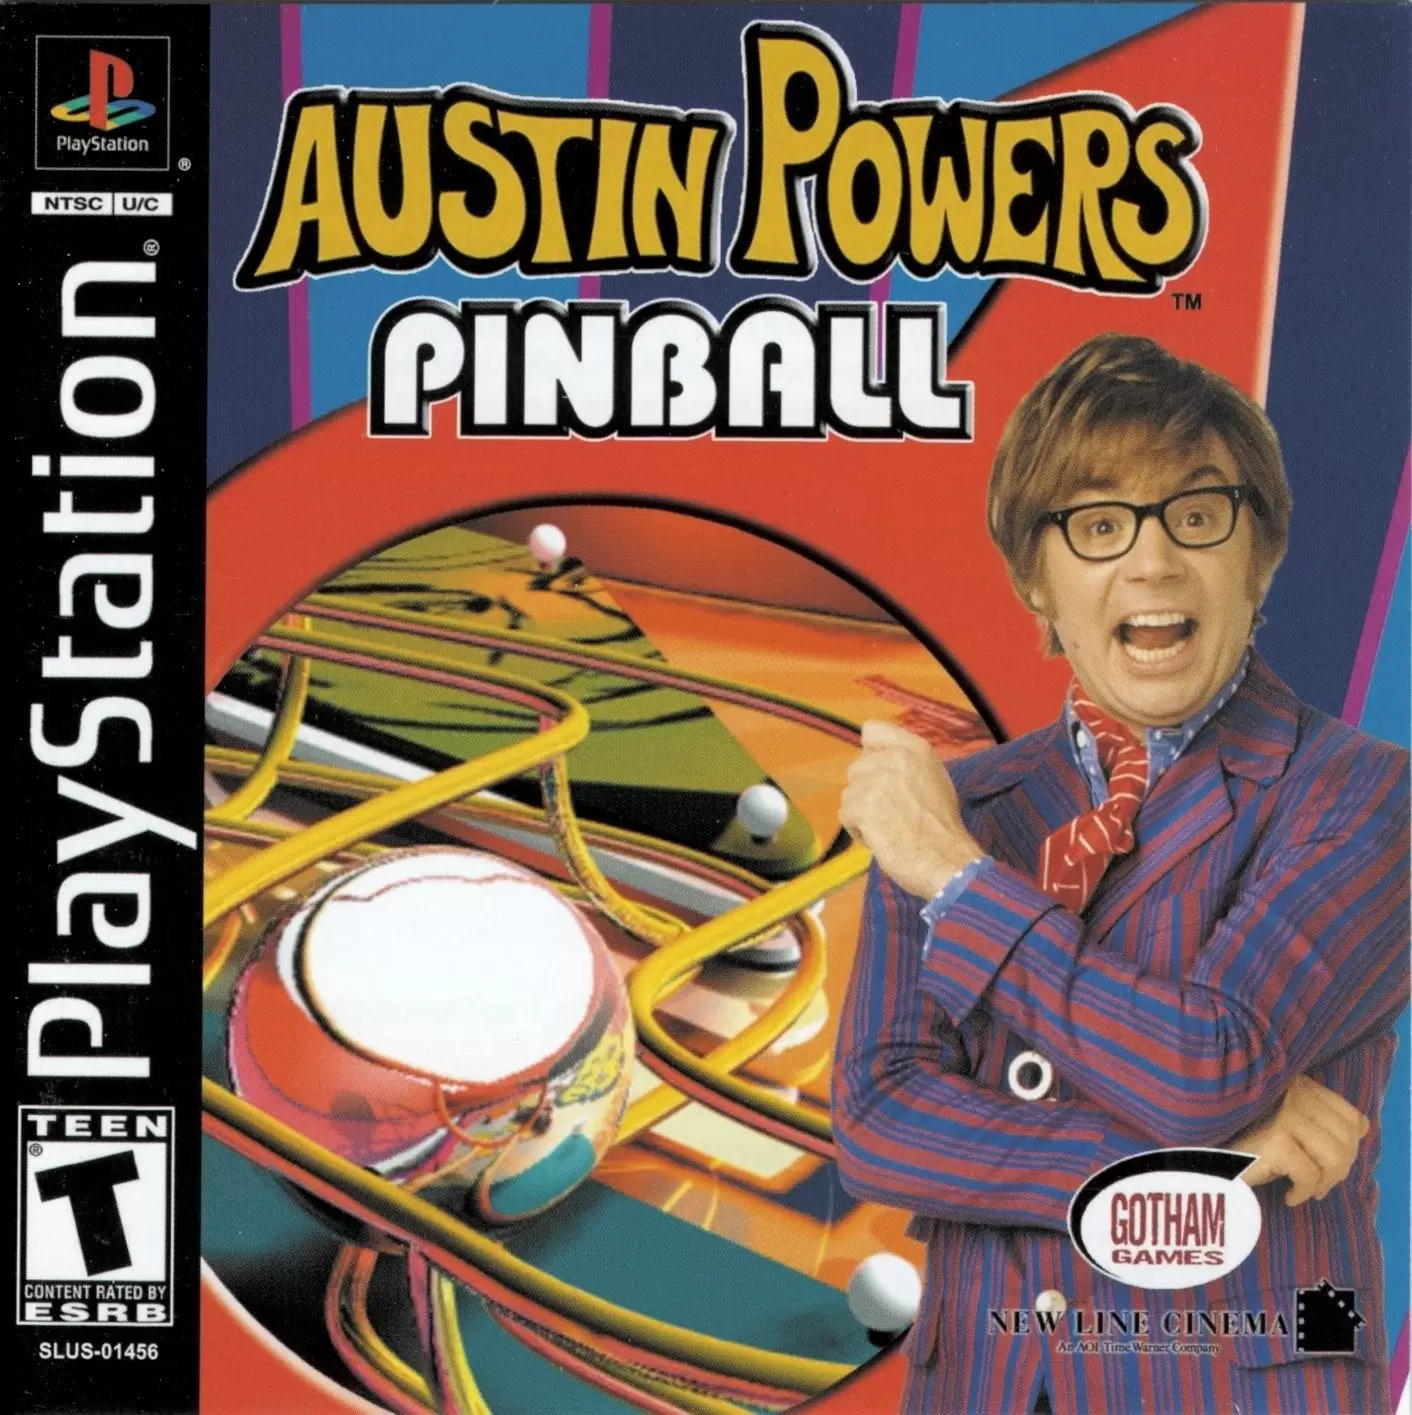 Playstation games - Austin Powers Pinball